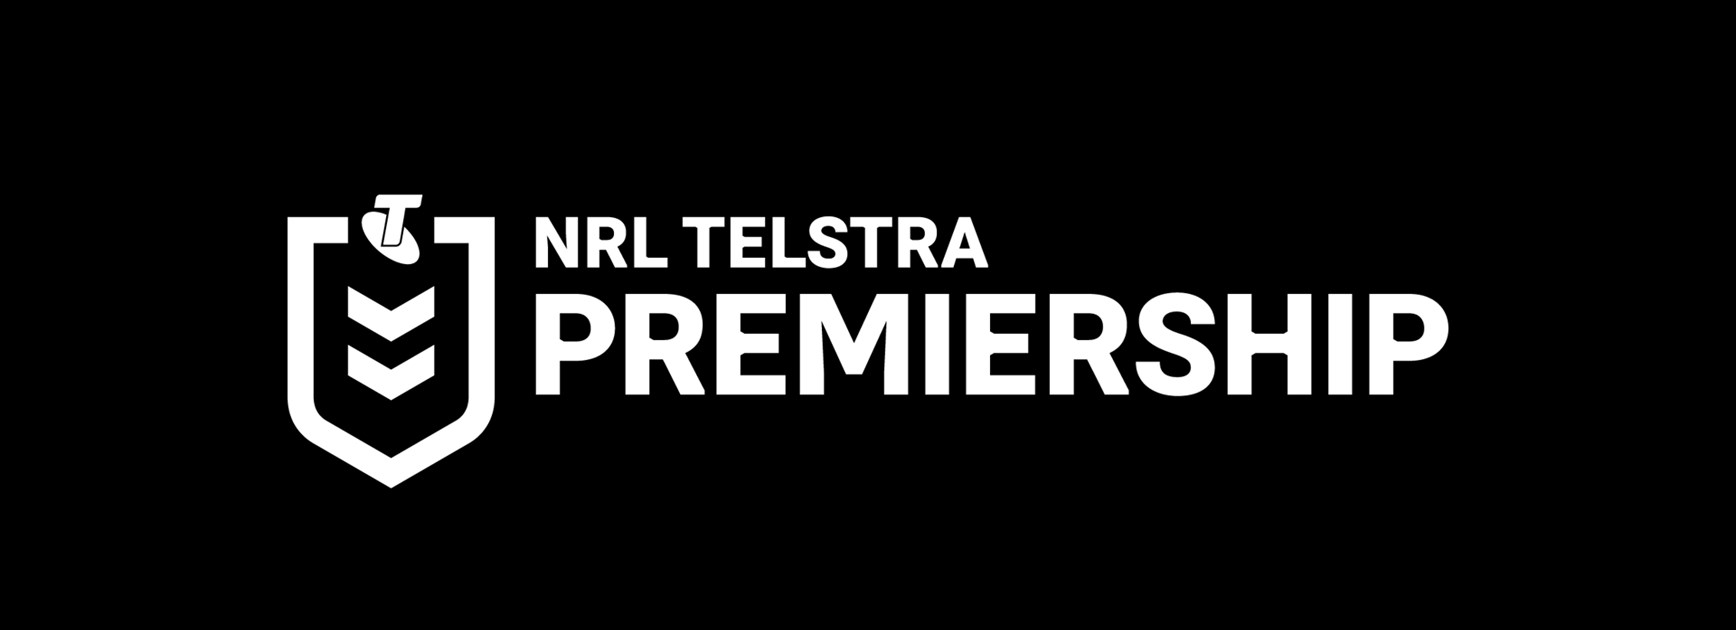 NRL statement: 2020 Telstra Premiership suspended